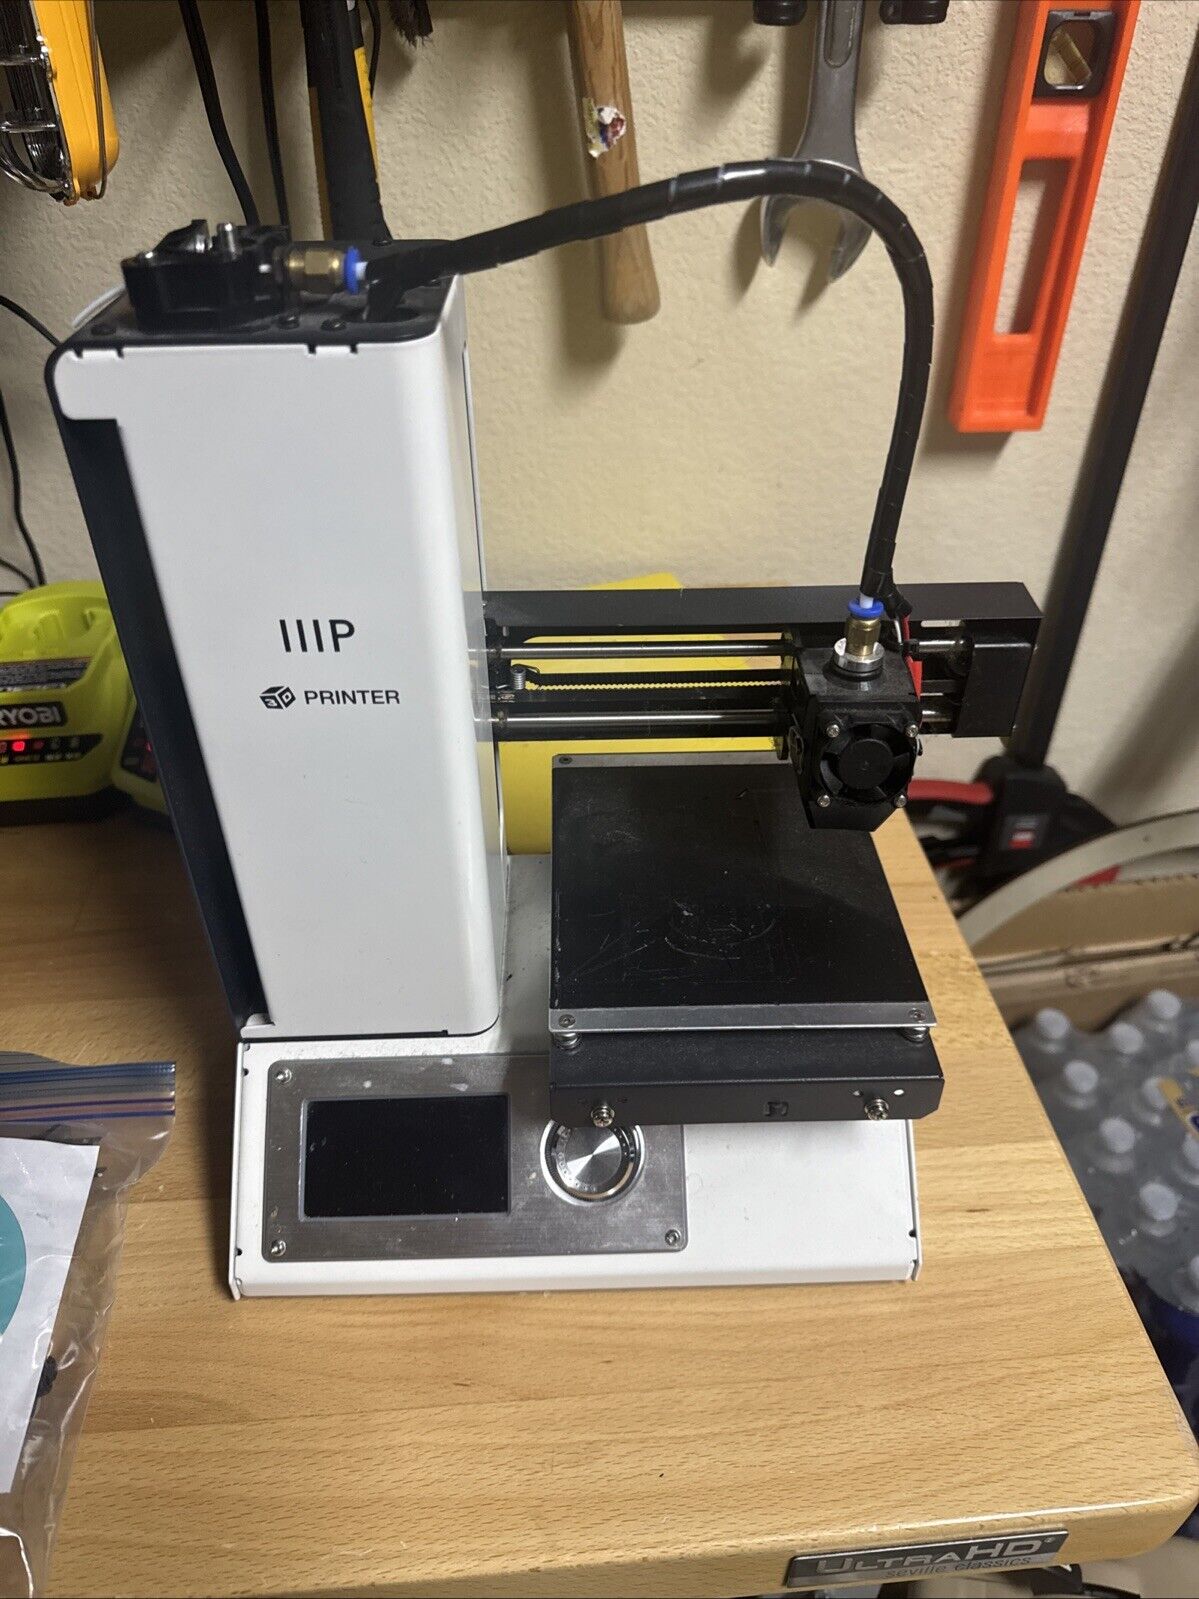 Monoprice 15365 Select Mini 3D MP 200 V2 lllP Printer (White)